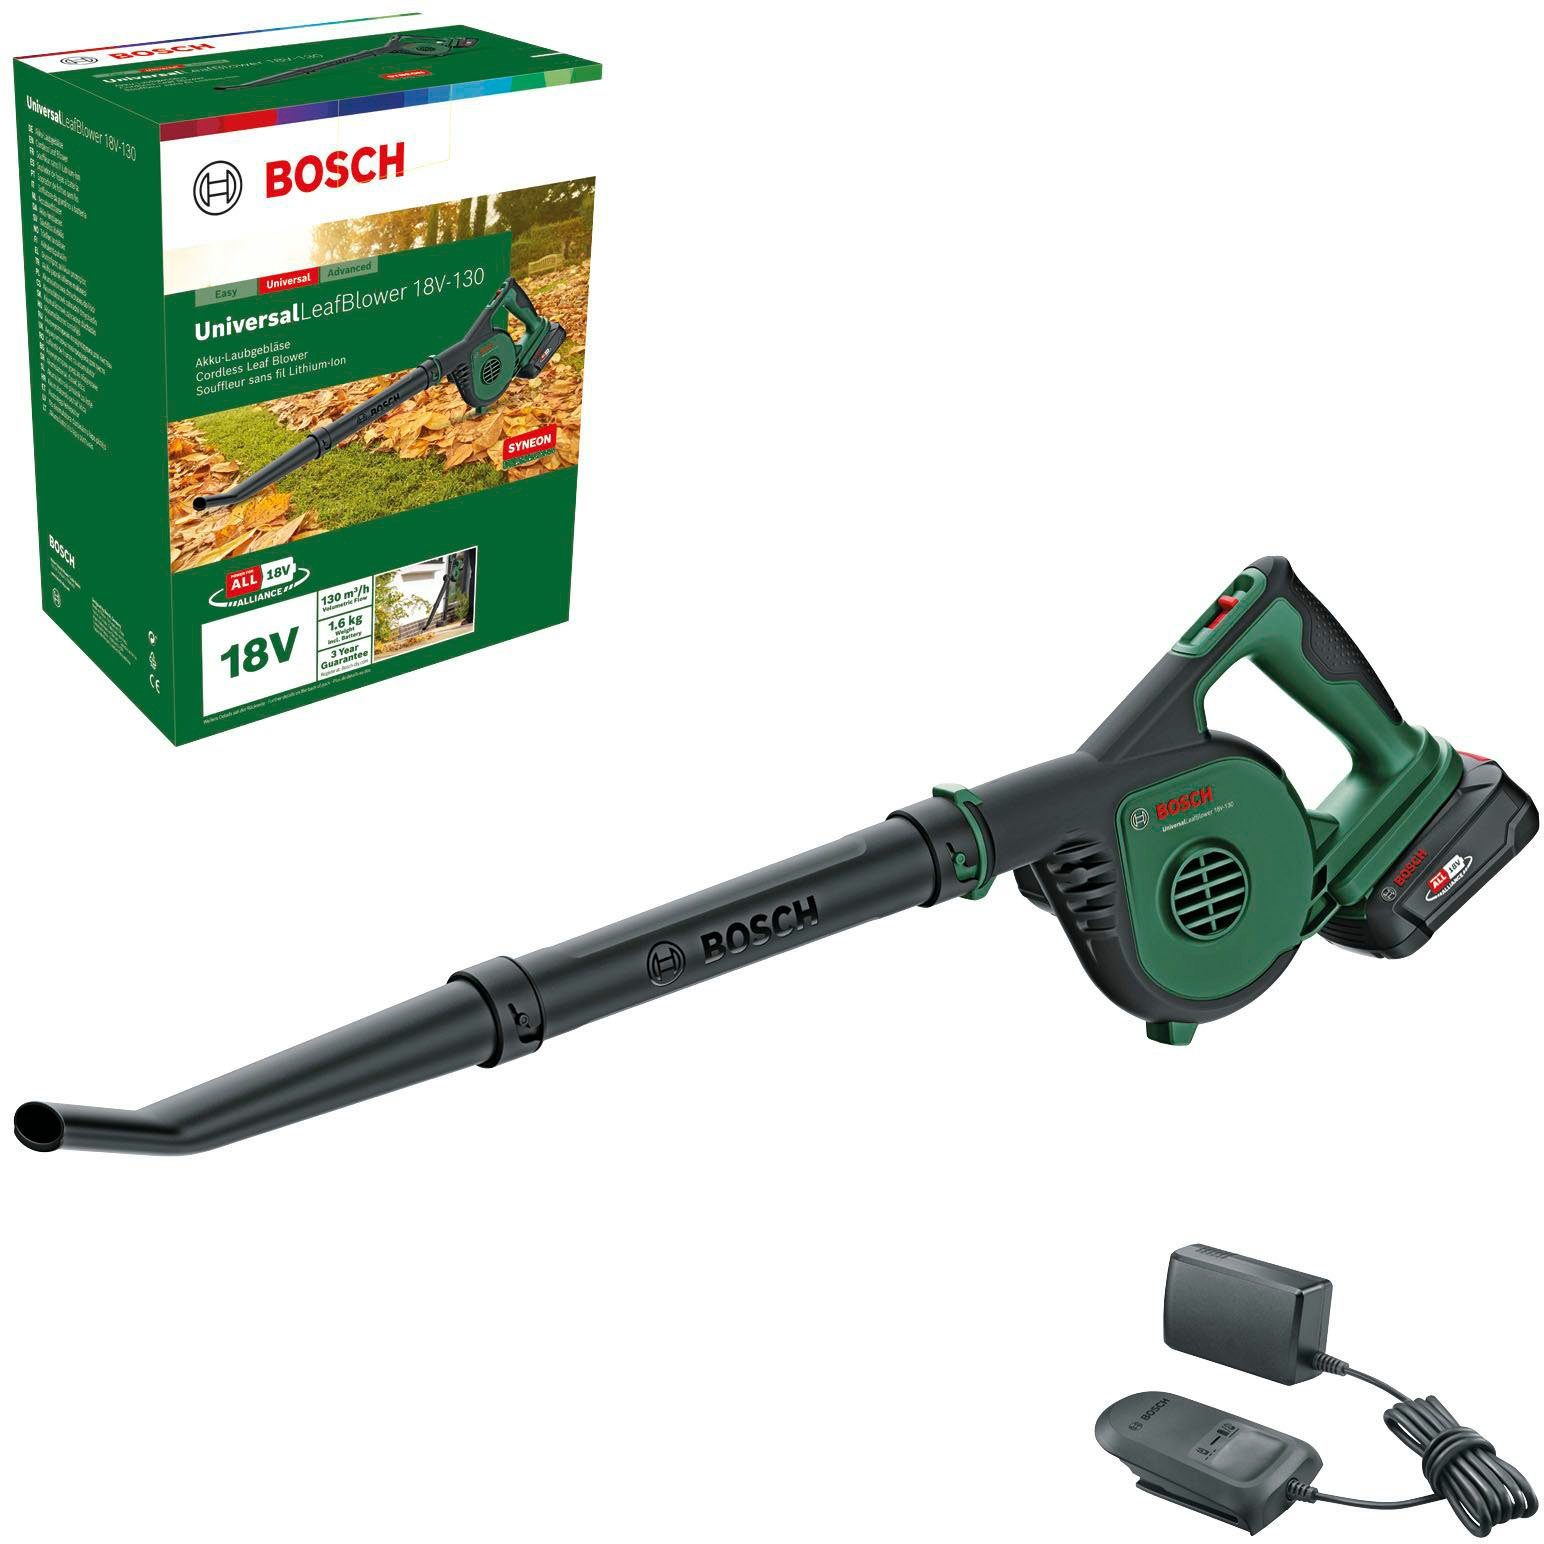 Bosch GBL 18V-120 Solo desde 74,51 €